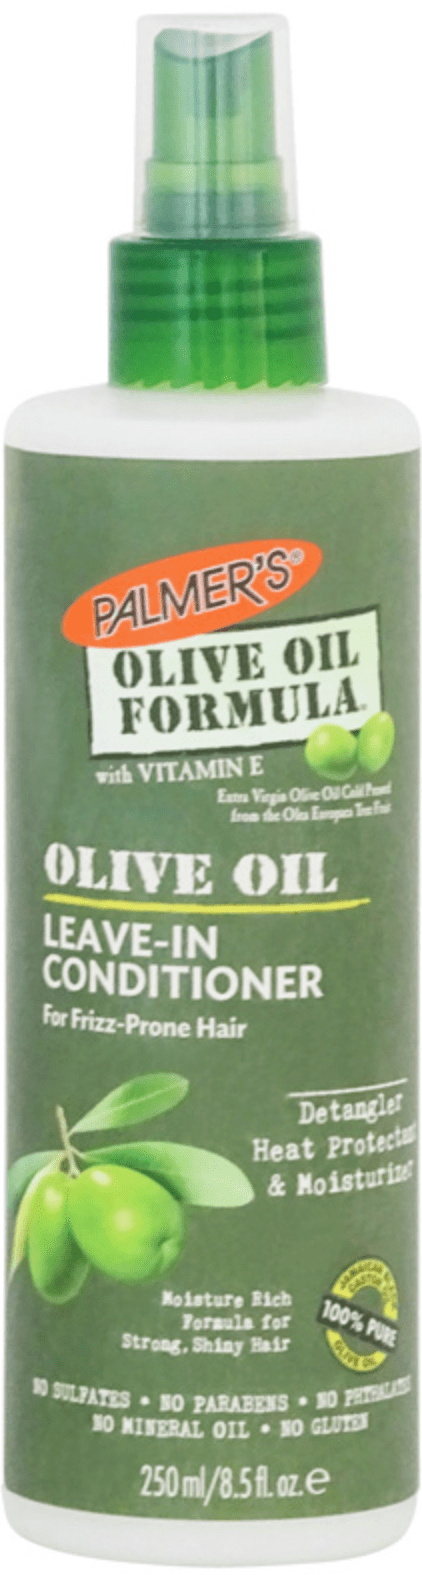 Palmer's - Leave-In Conditioner "Olive Oil Formula" - 250ml - Palmer's - Ethni Beauty Market